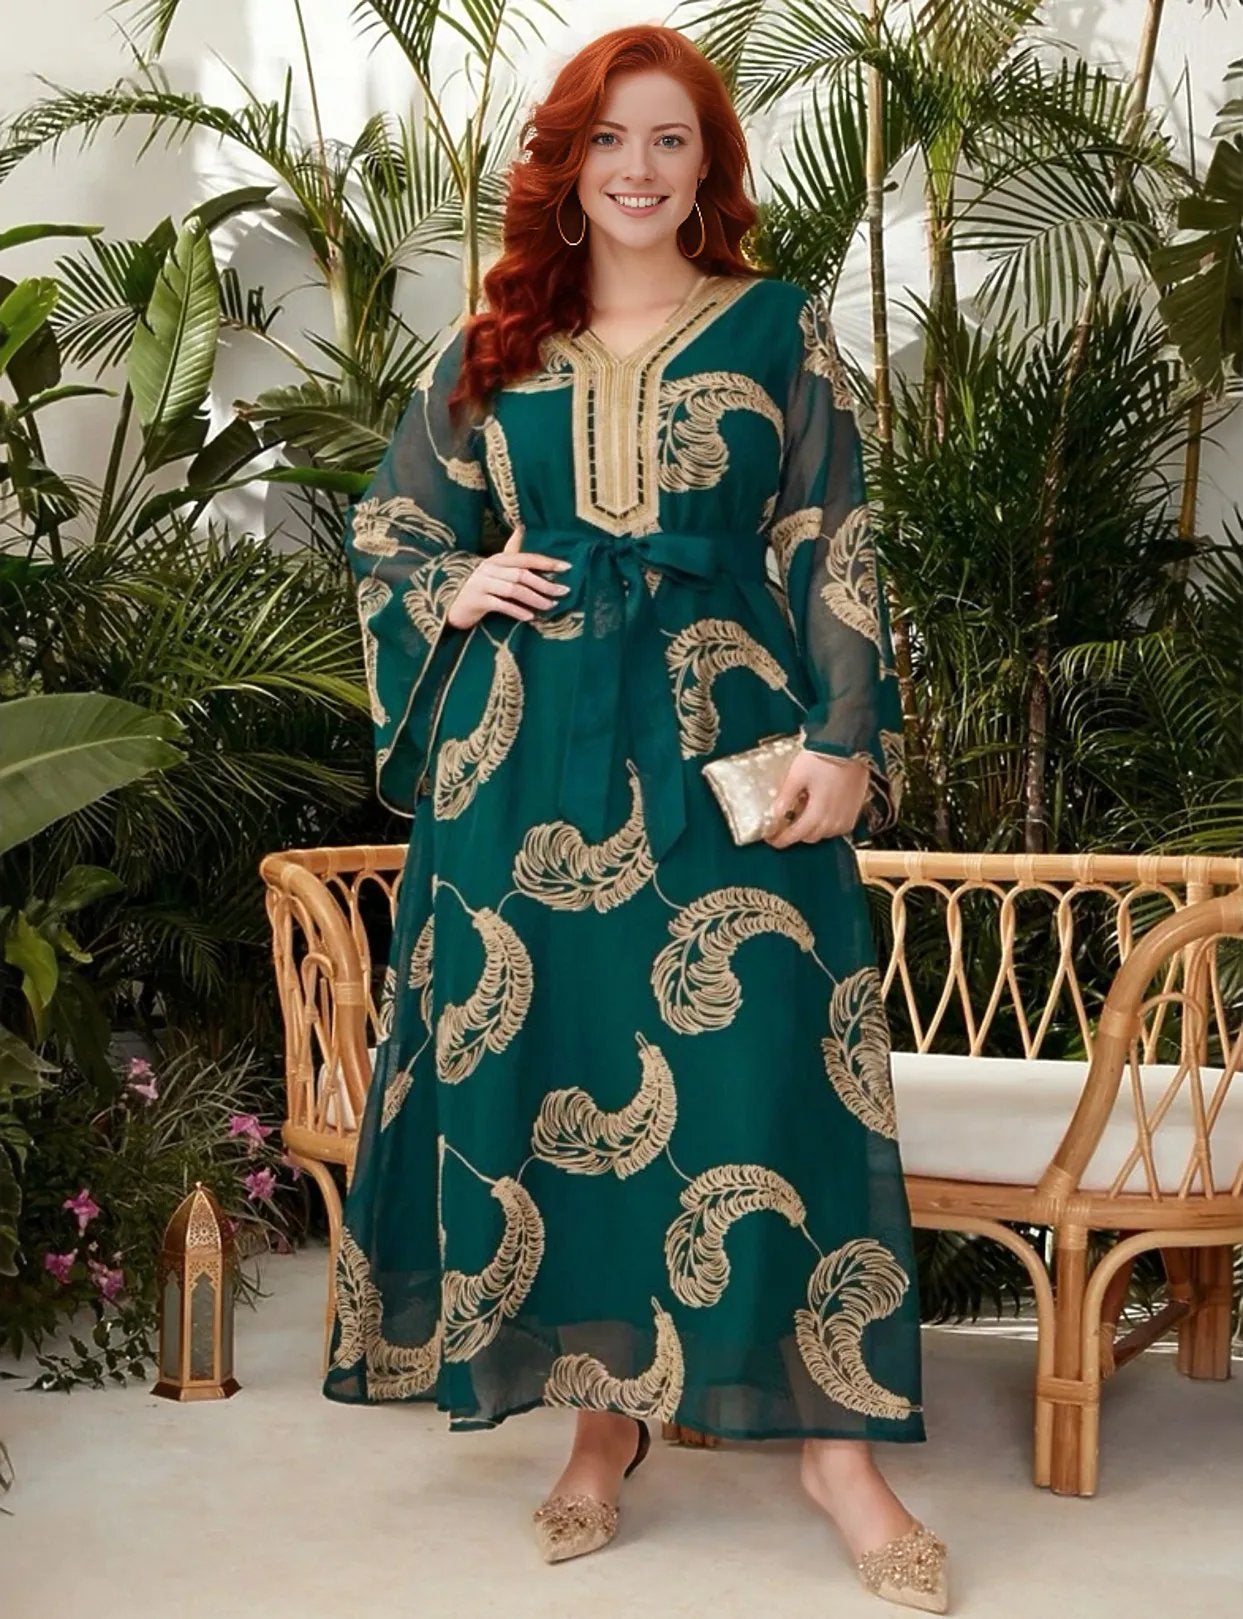 Feather Print Green Flow Dress, Sizes 0XL - 4XL (US 12 - 20)